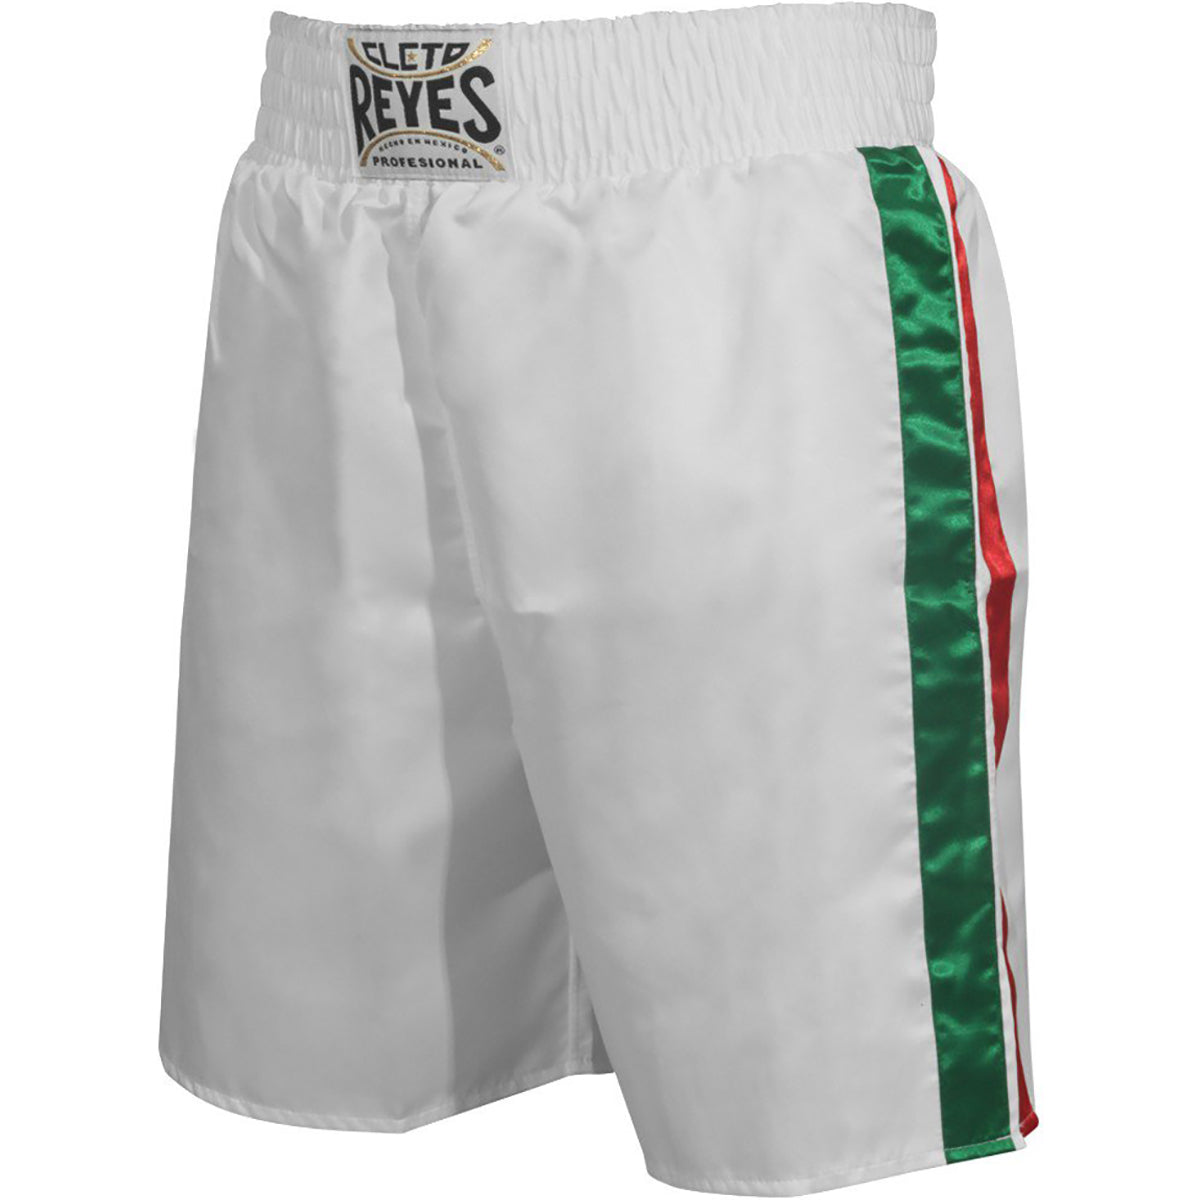 Cleto Reyes Satin Classic Boxing Trunks - XL (44") - Mexican Flag Cleto Reyes